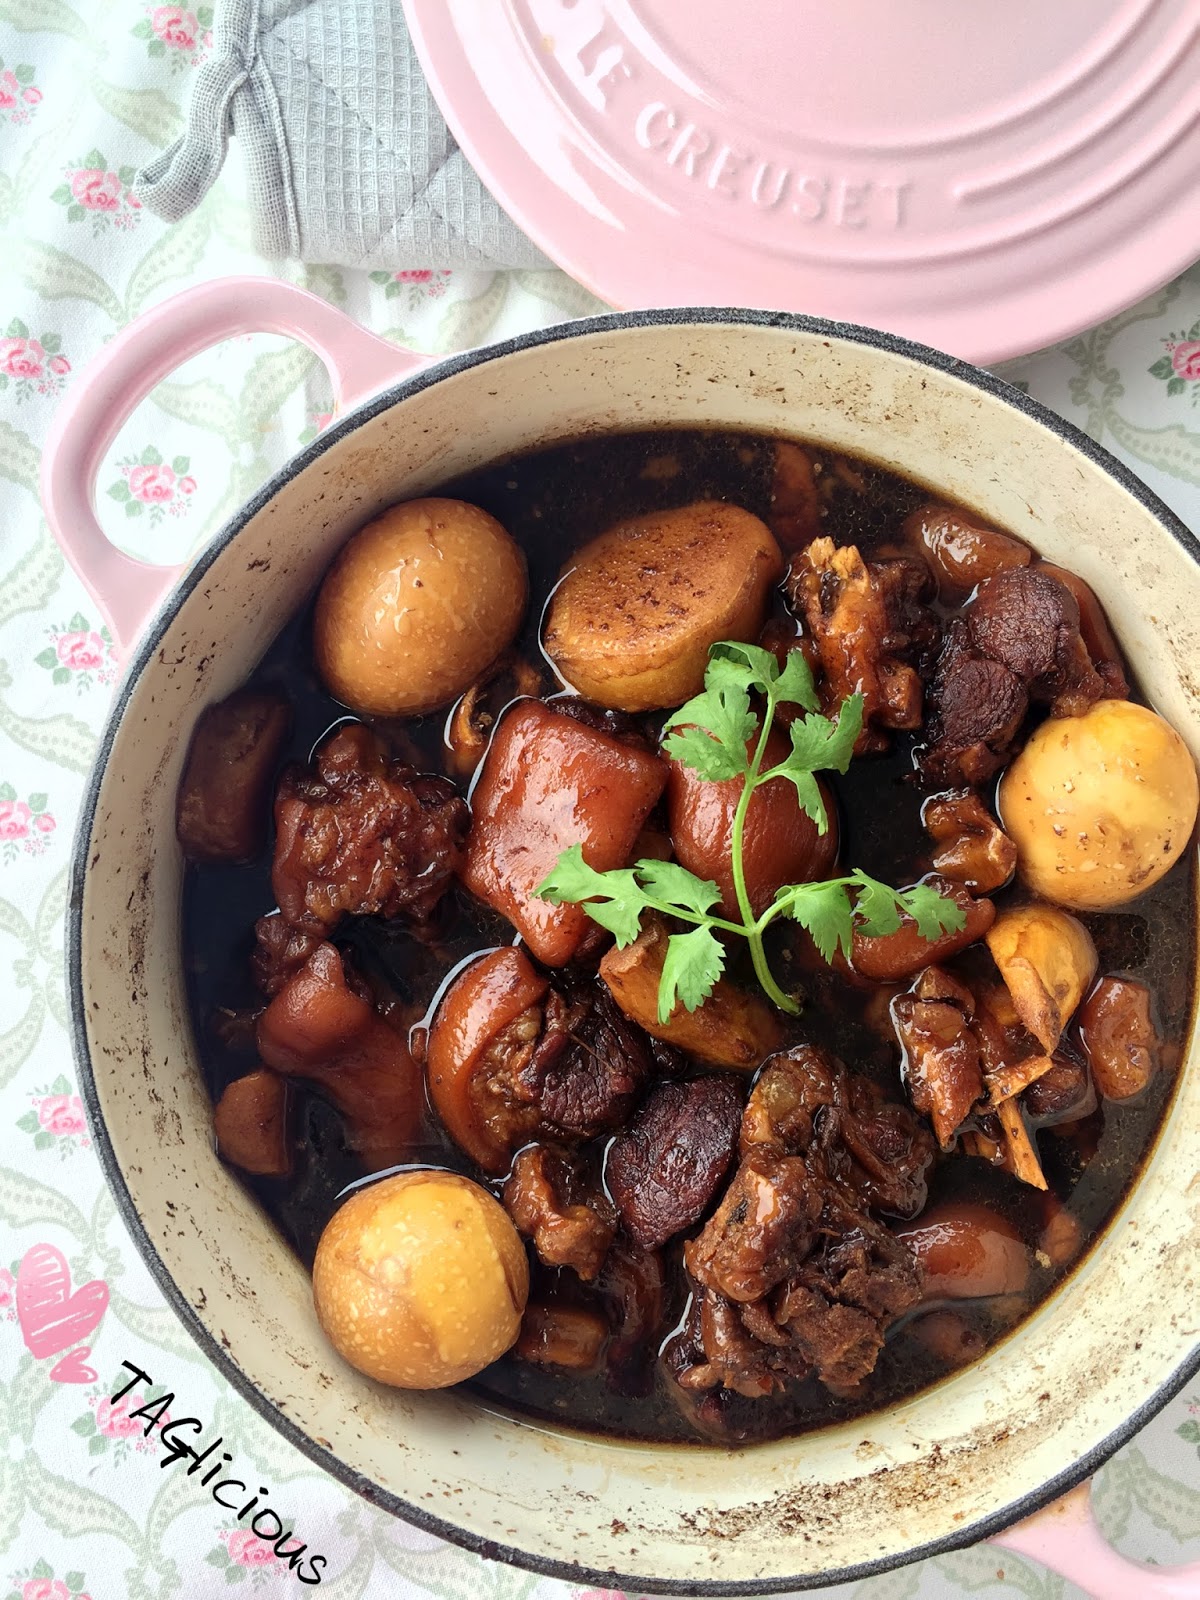 TAGlicious: Pig Trotter & Ginger Vinegar stew